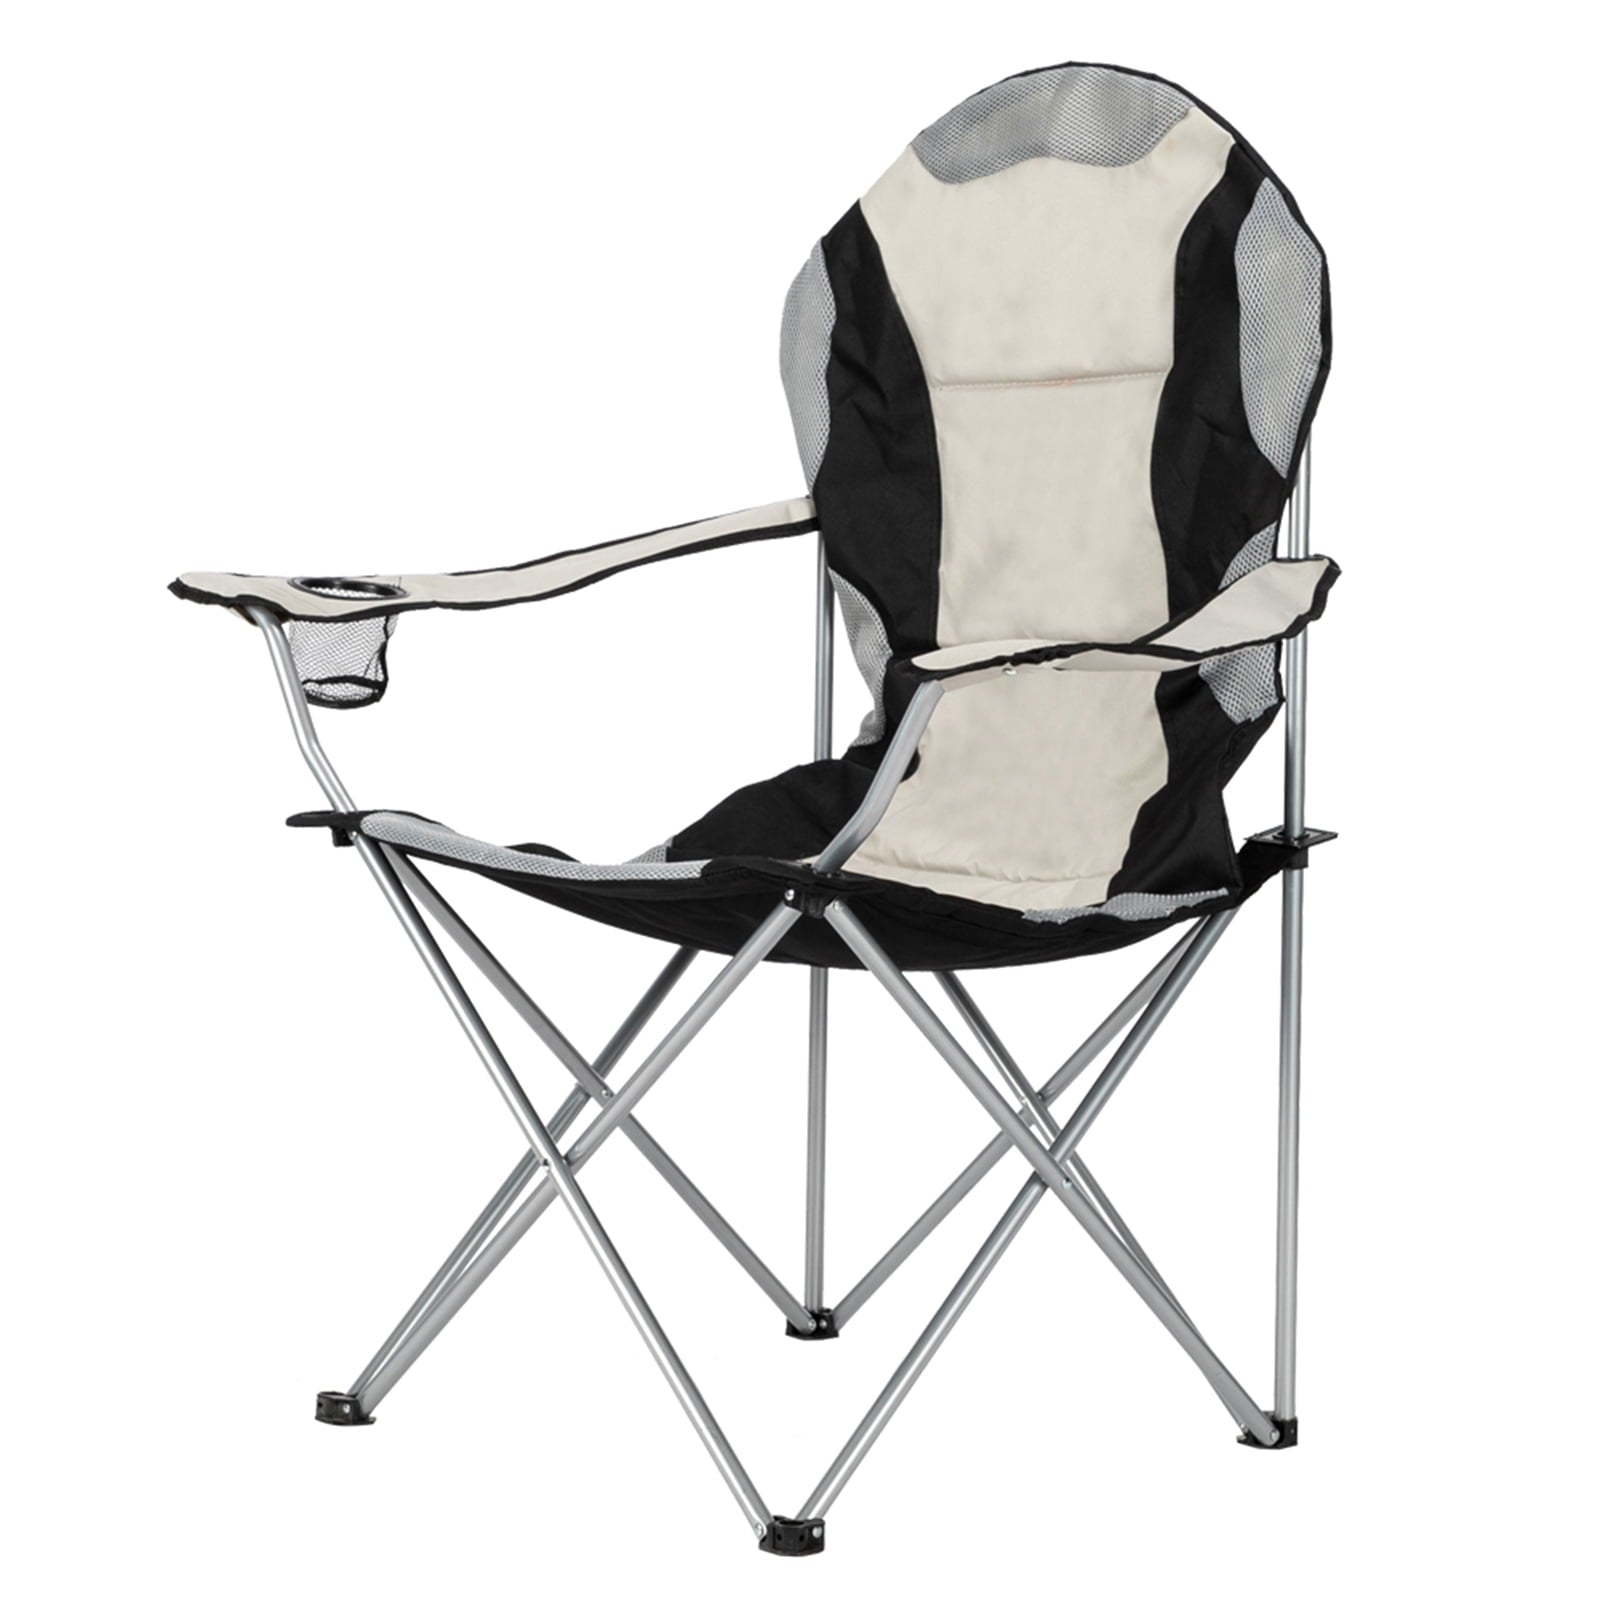 Suzicca Medium Camping Chair Fishing Chair Folding Chair Black Gray